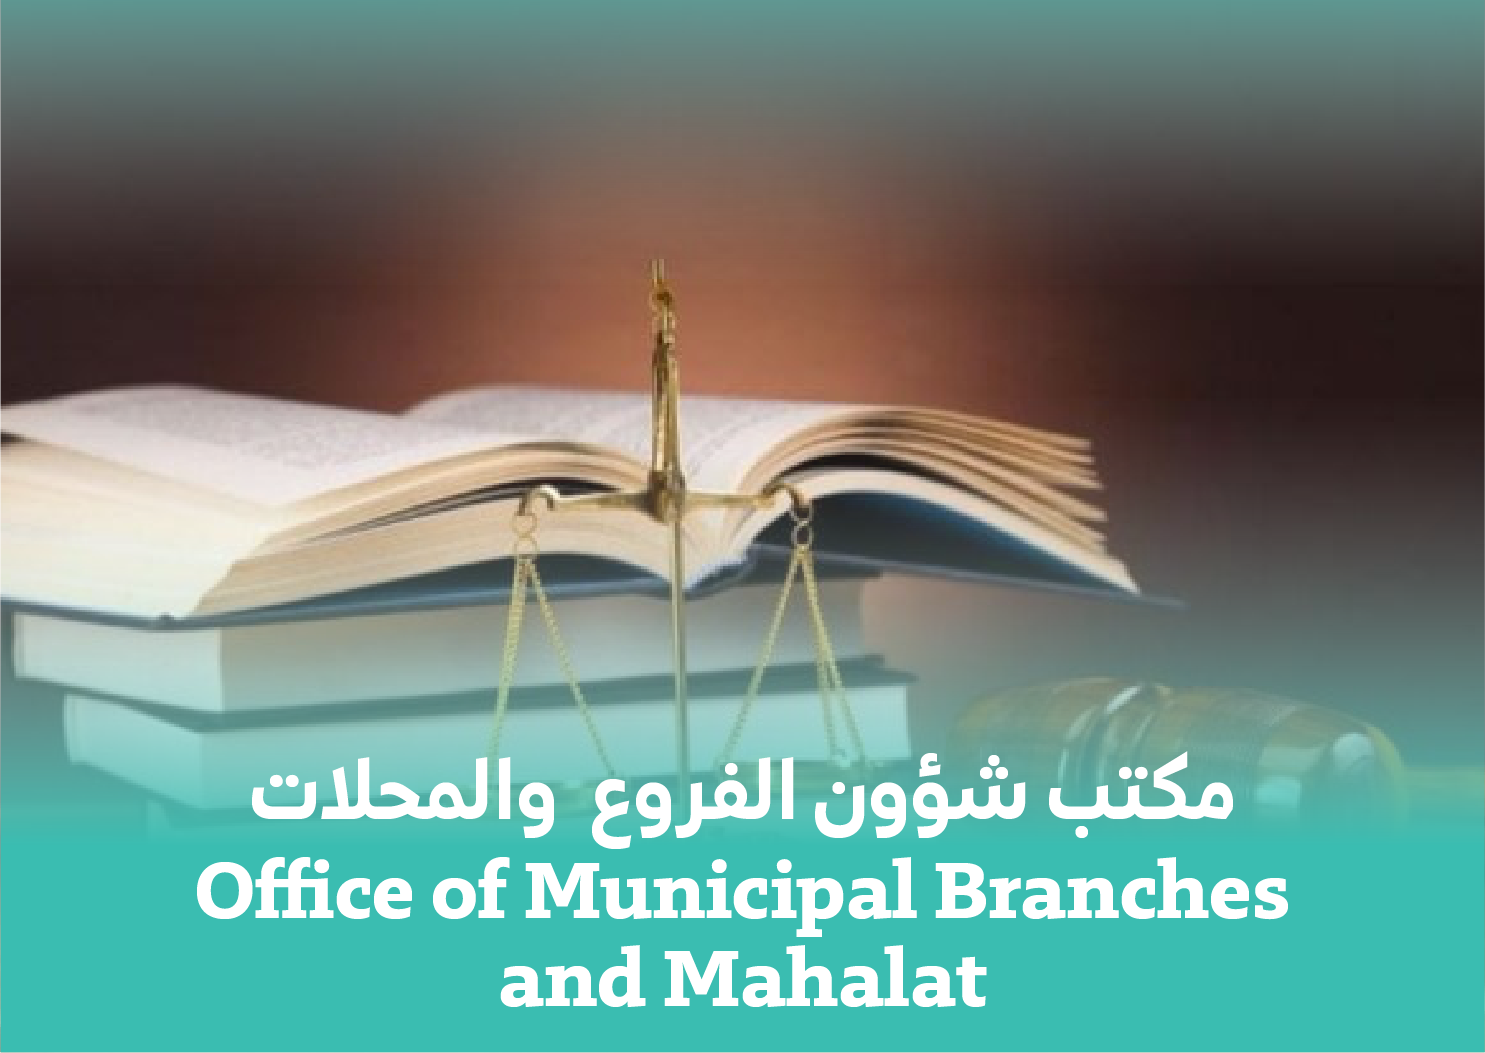 Office of Municipal Branches and Mahalat